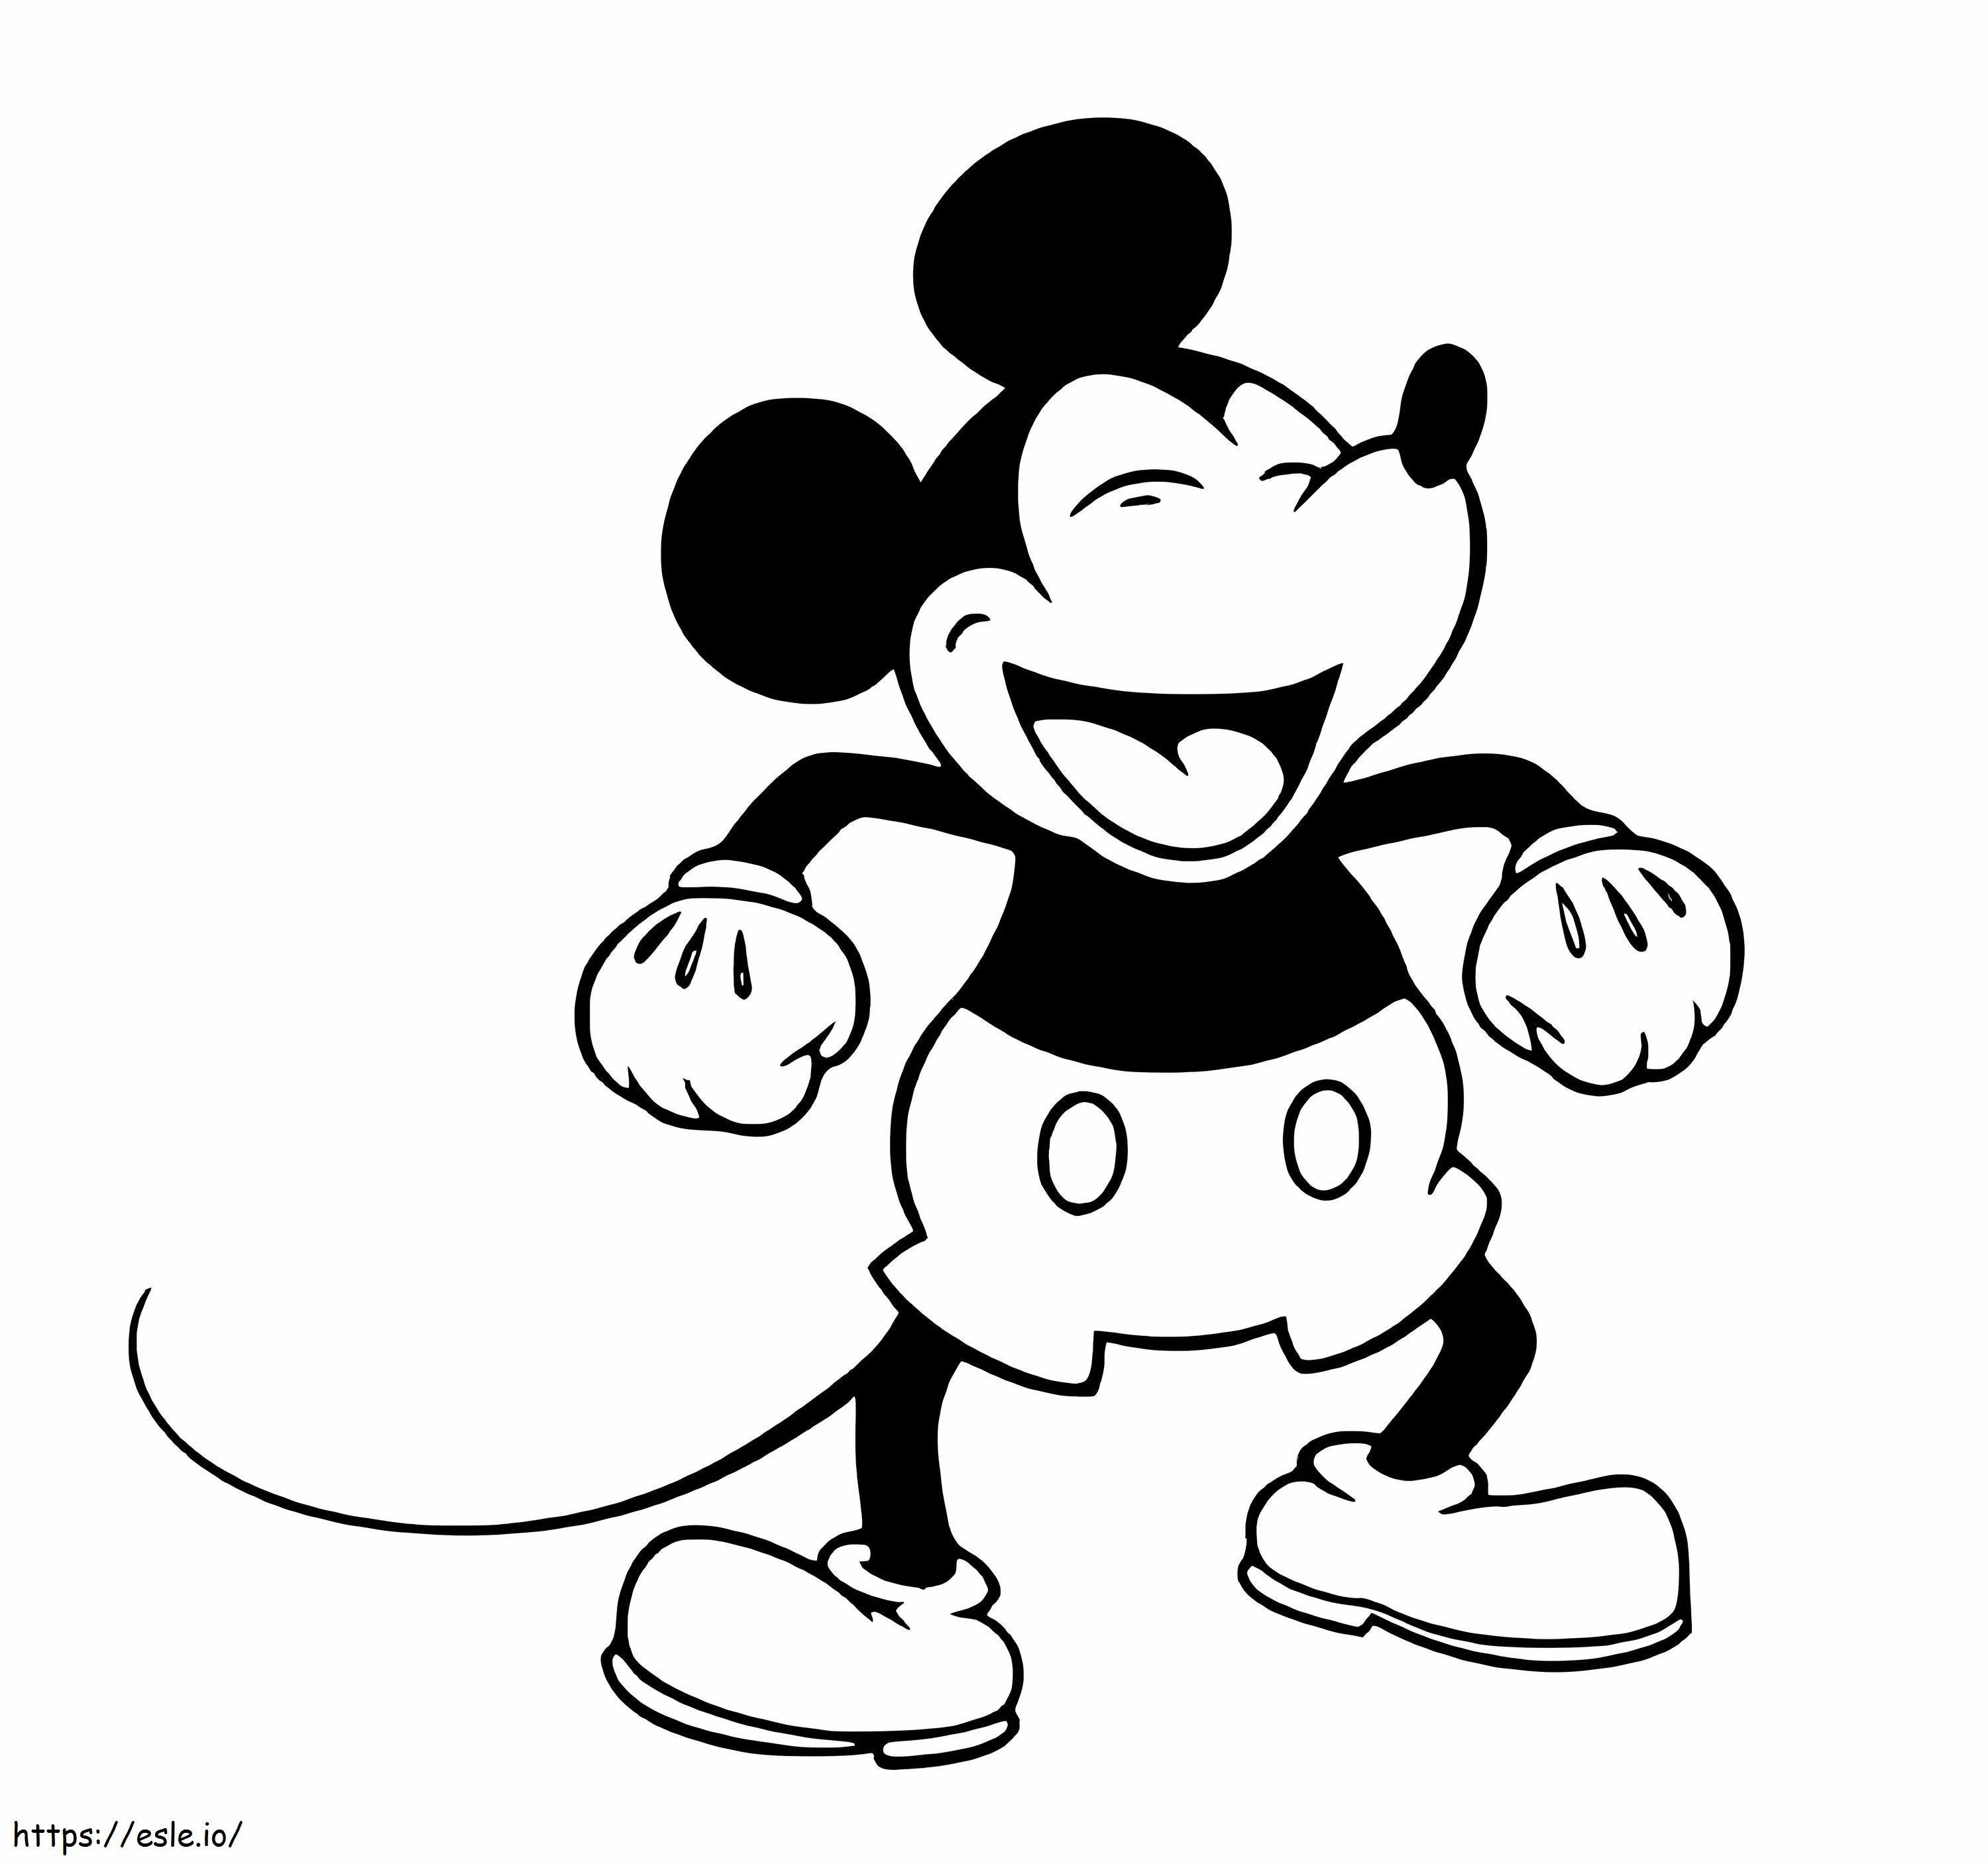 Coloriage Mickey Mouse qui rit à imprimer dessin